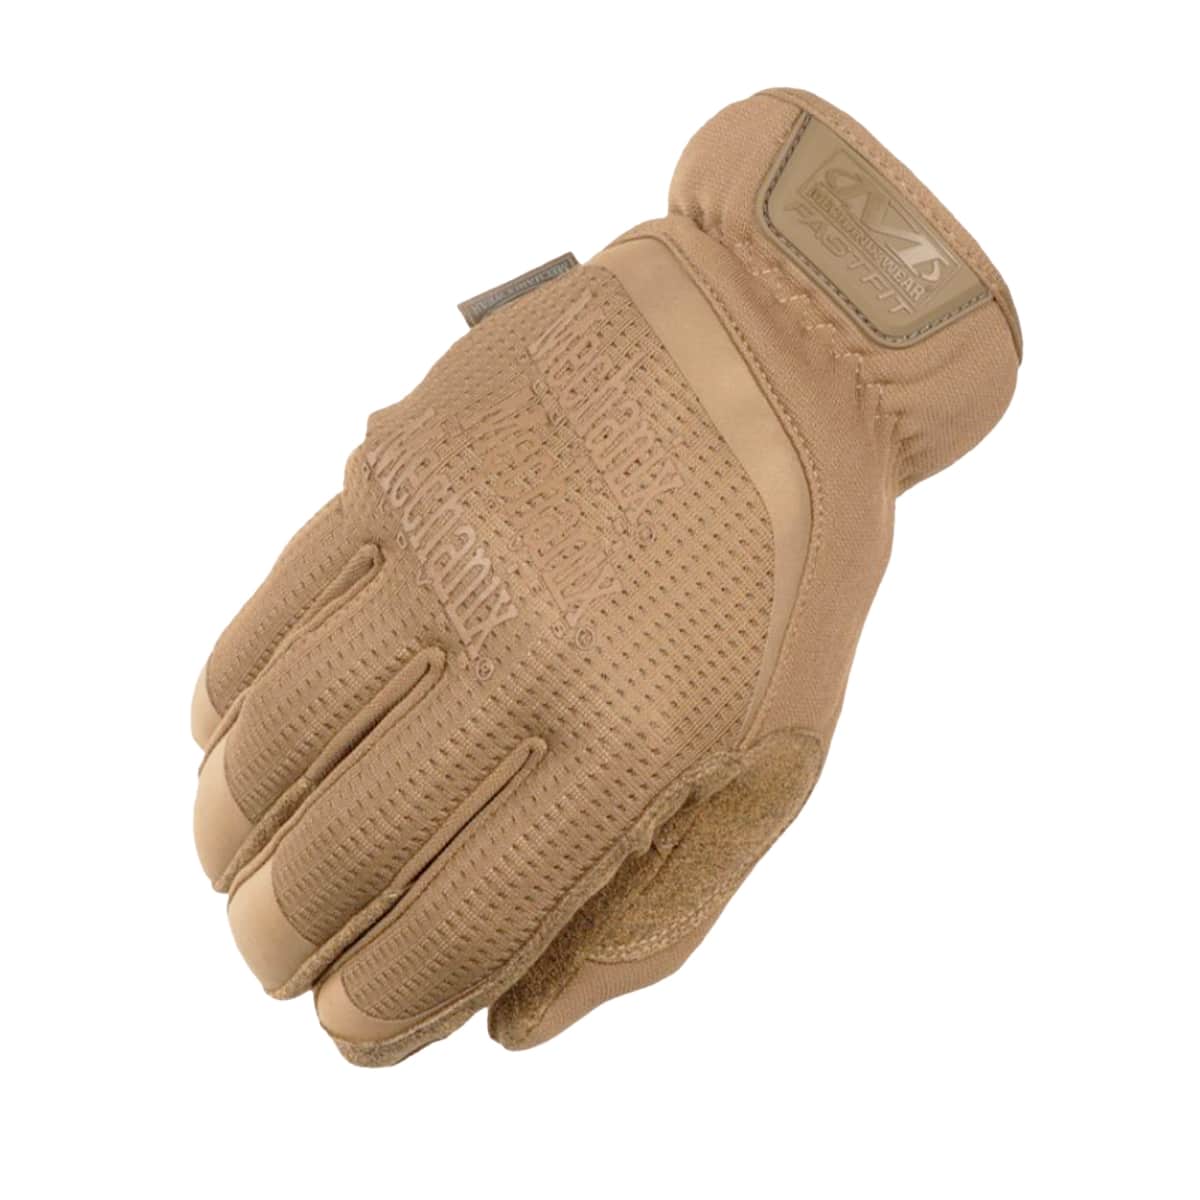 Airsoft tactical Mechanix Wear ® gloves FastFit ® GEN 2 MultiCam® coyote